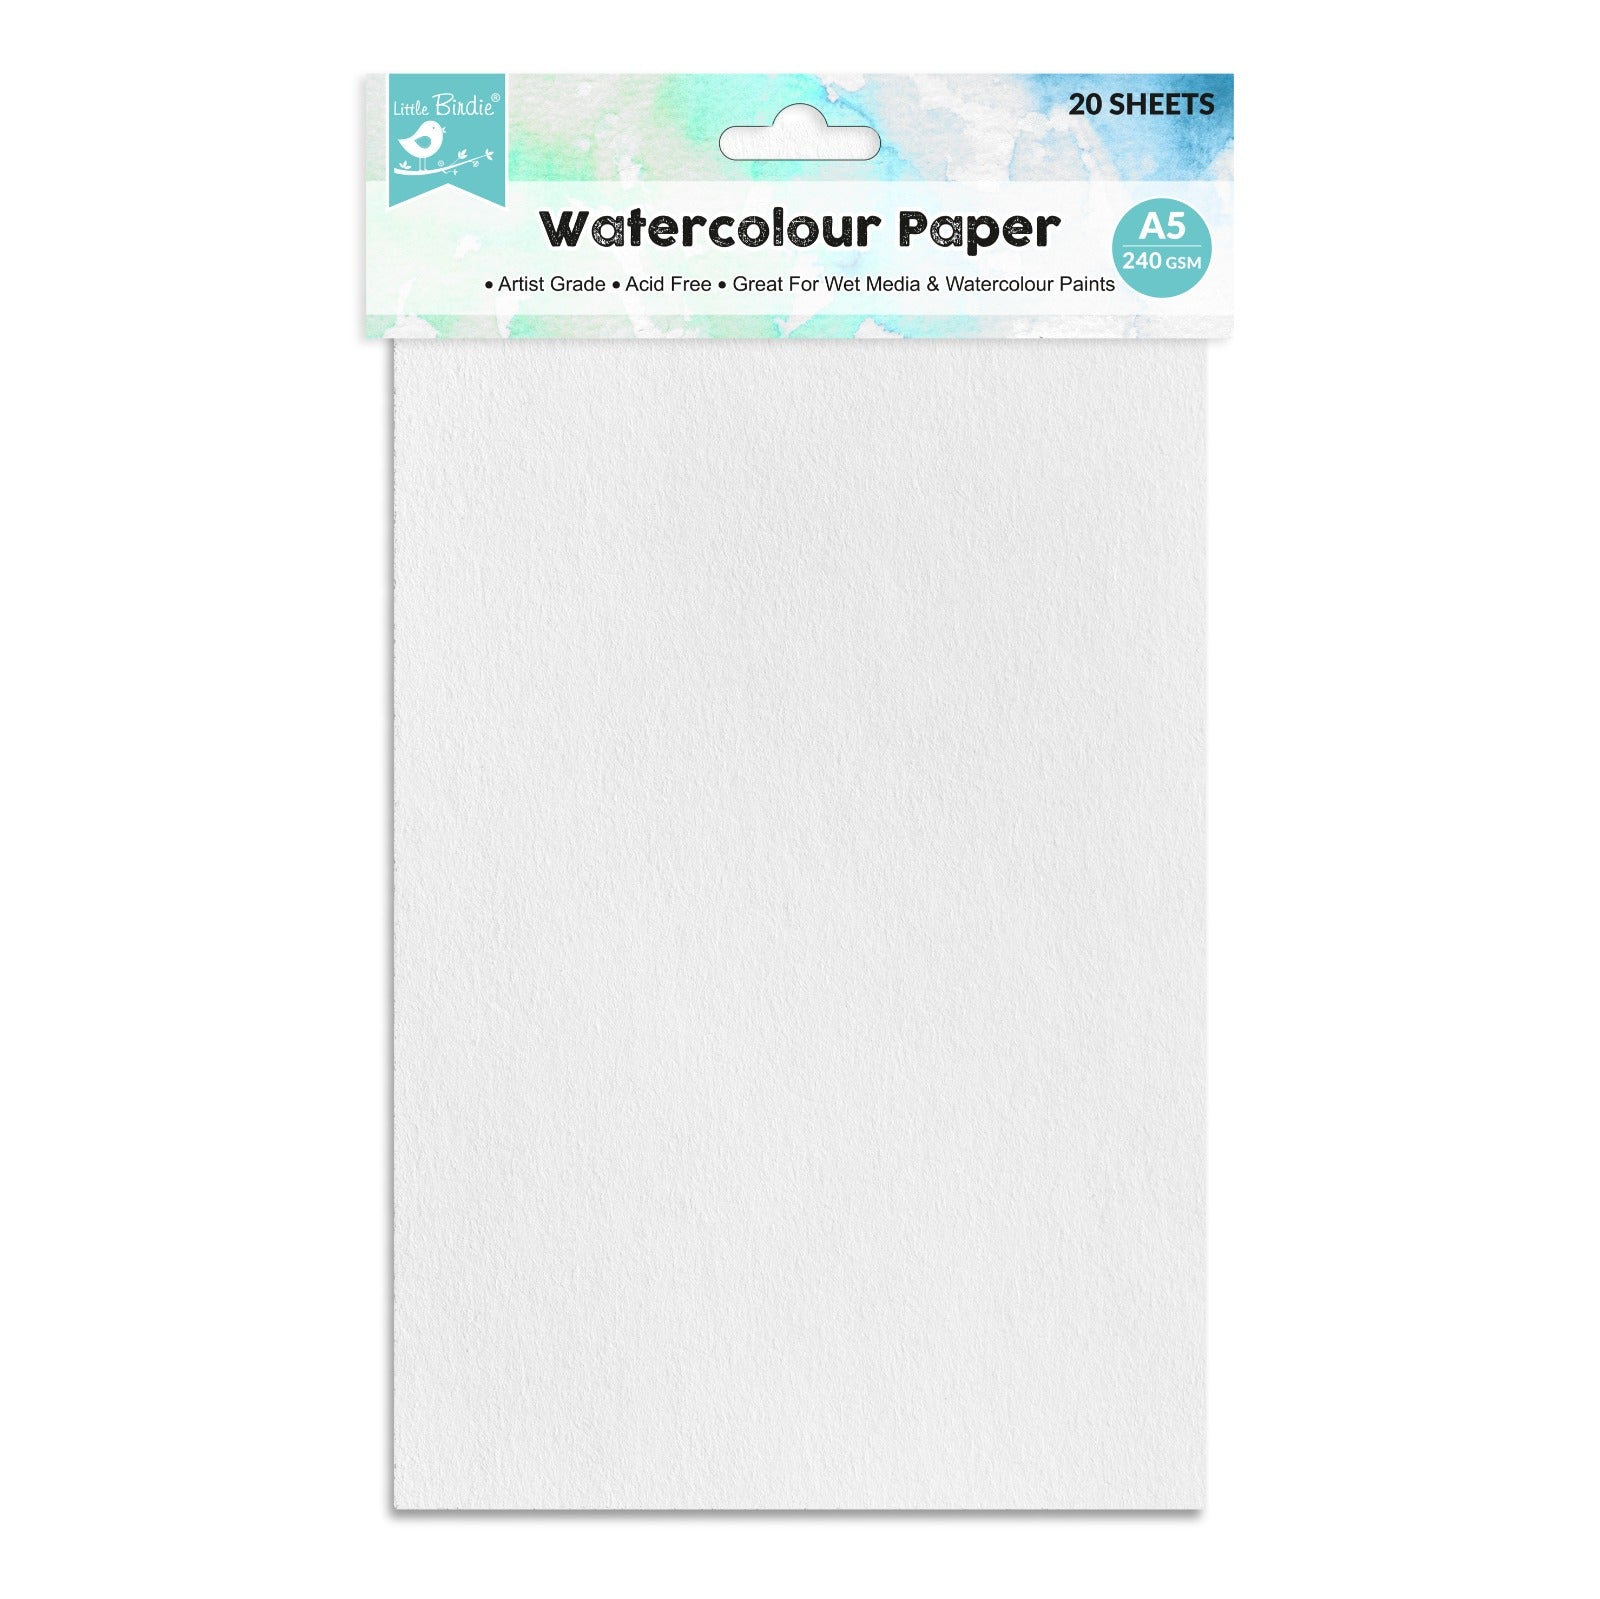 Premium Watercolour Paper 240Gsm A5 20 Sheets